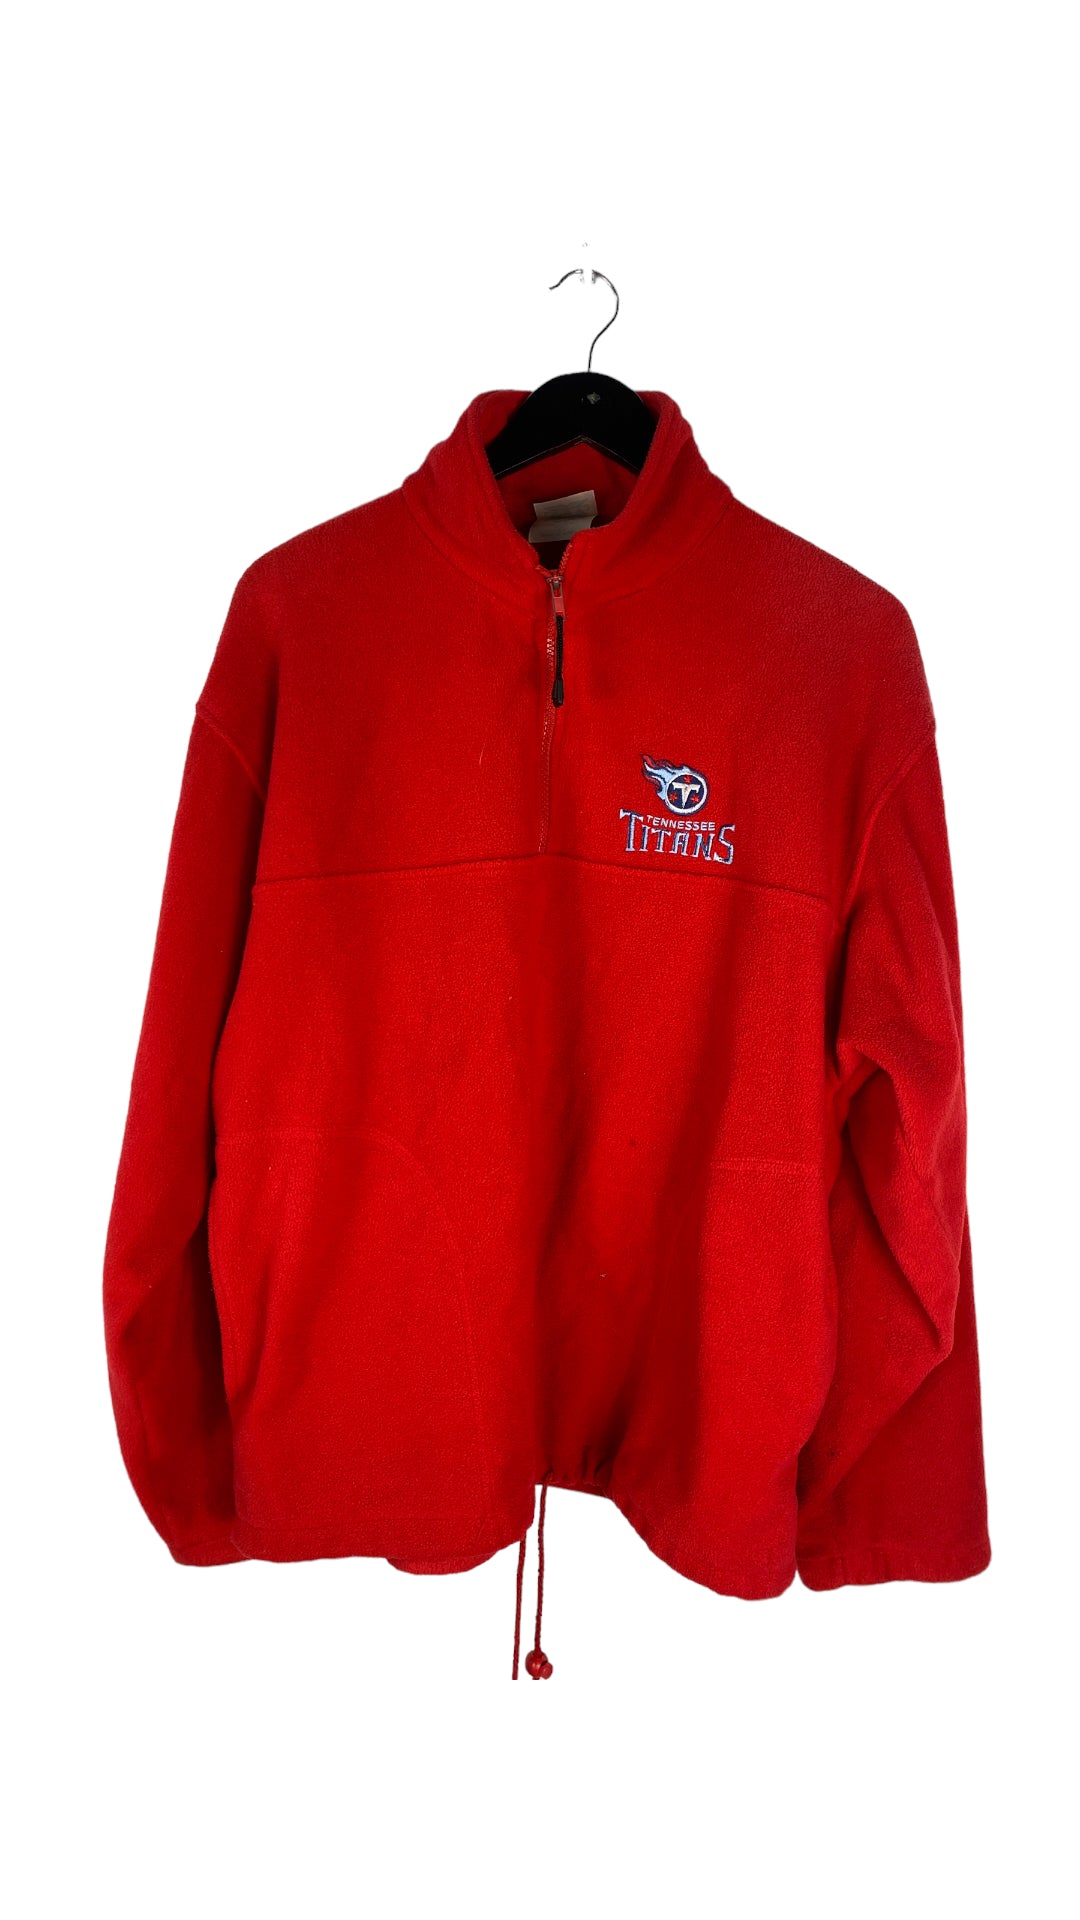 VTG Tennessee Titans Red Fleece Half Zip Jacket Sz L